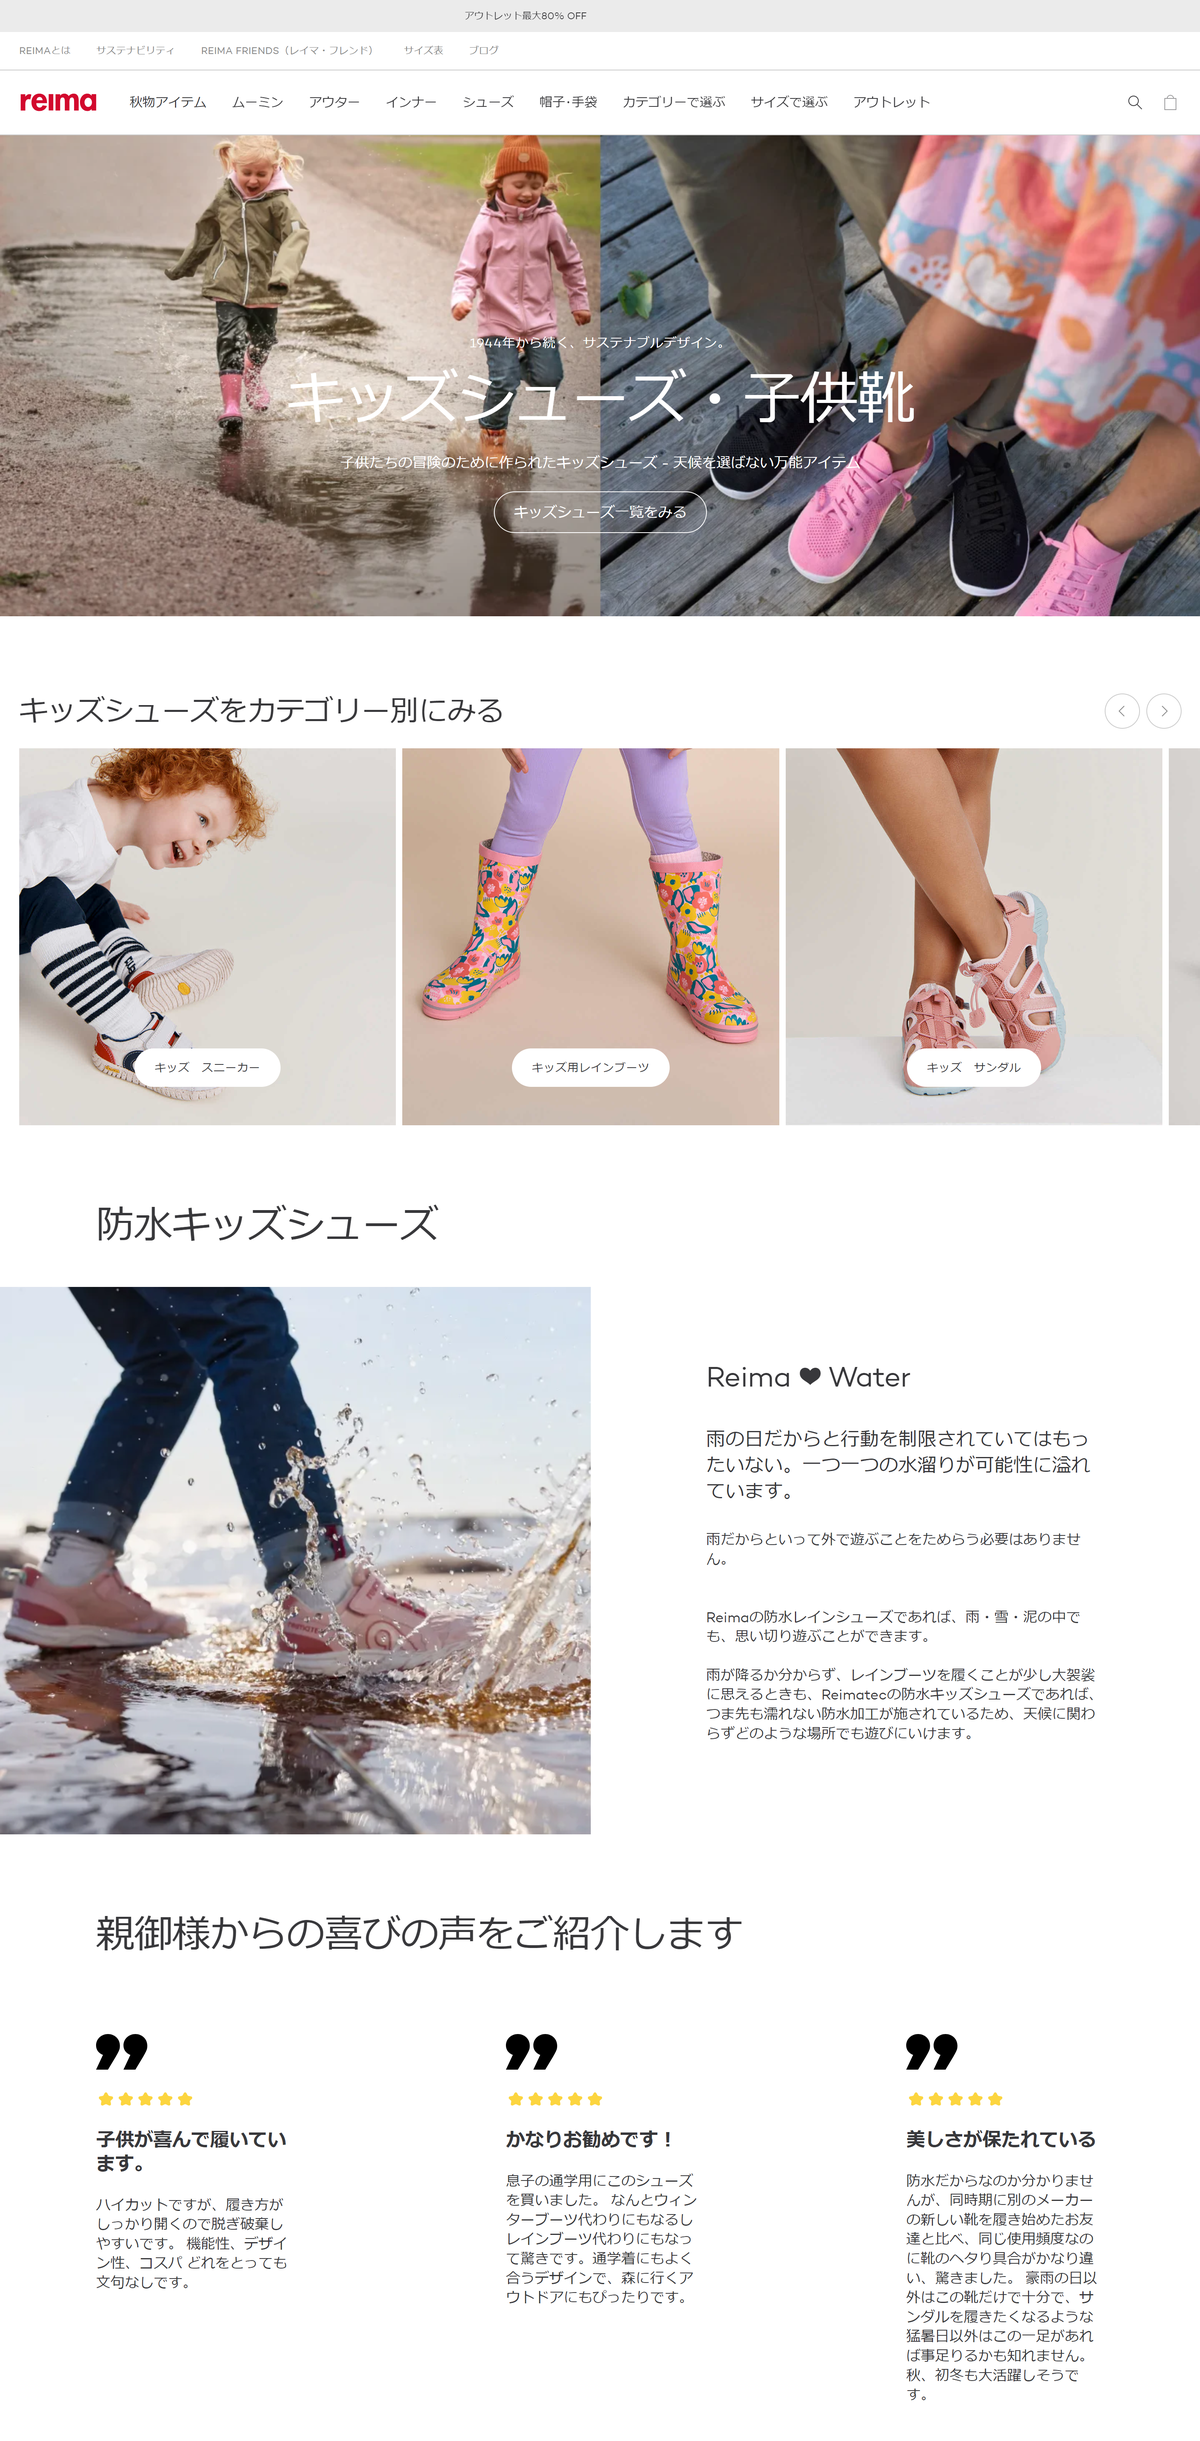 Reima SEO Pillar Page Content Kids Footwear